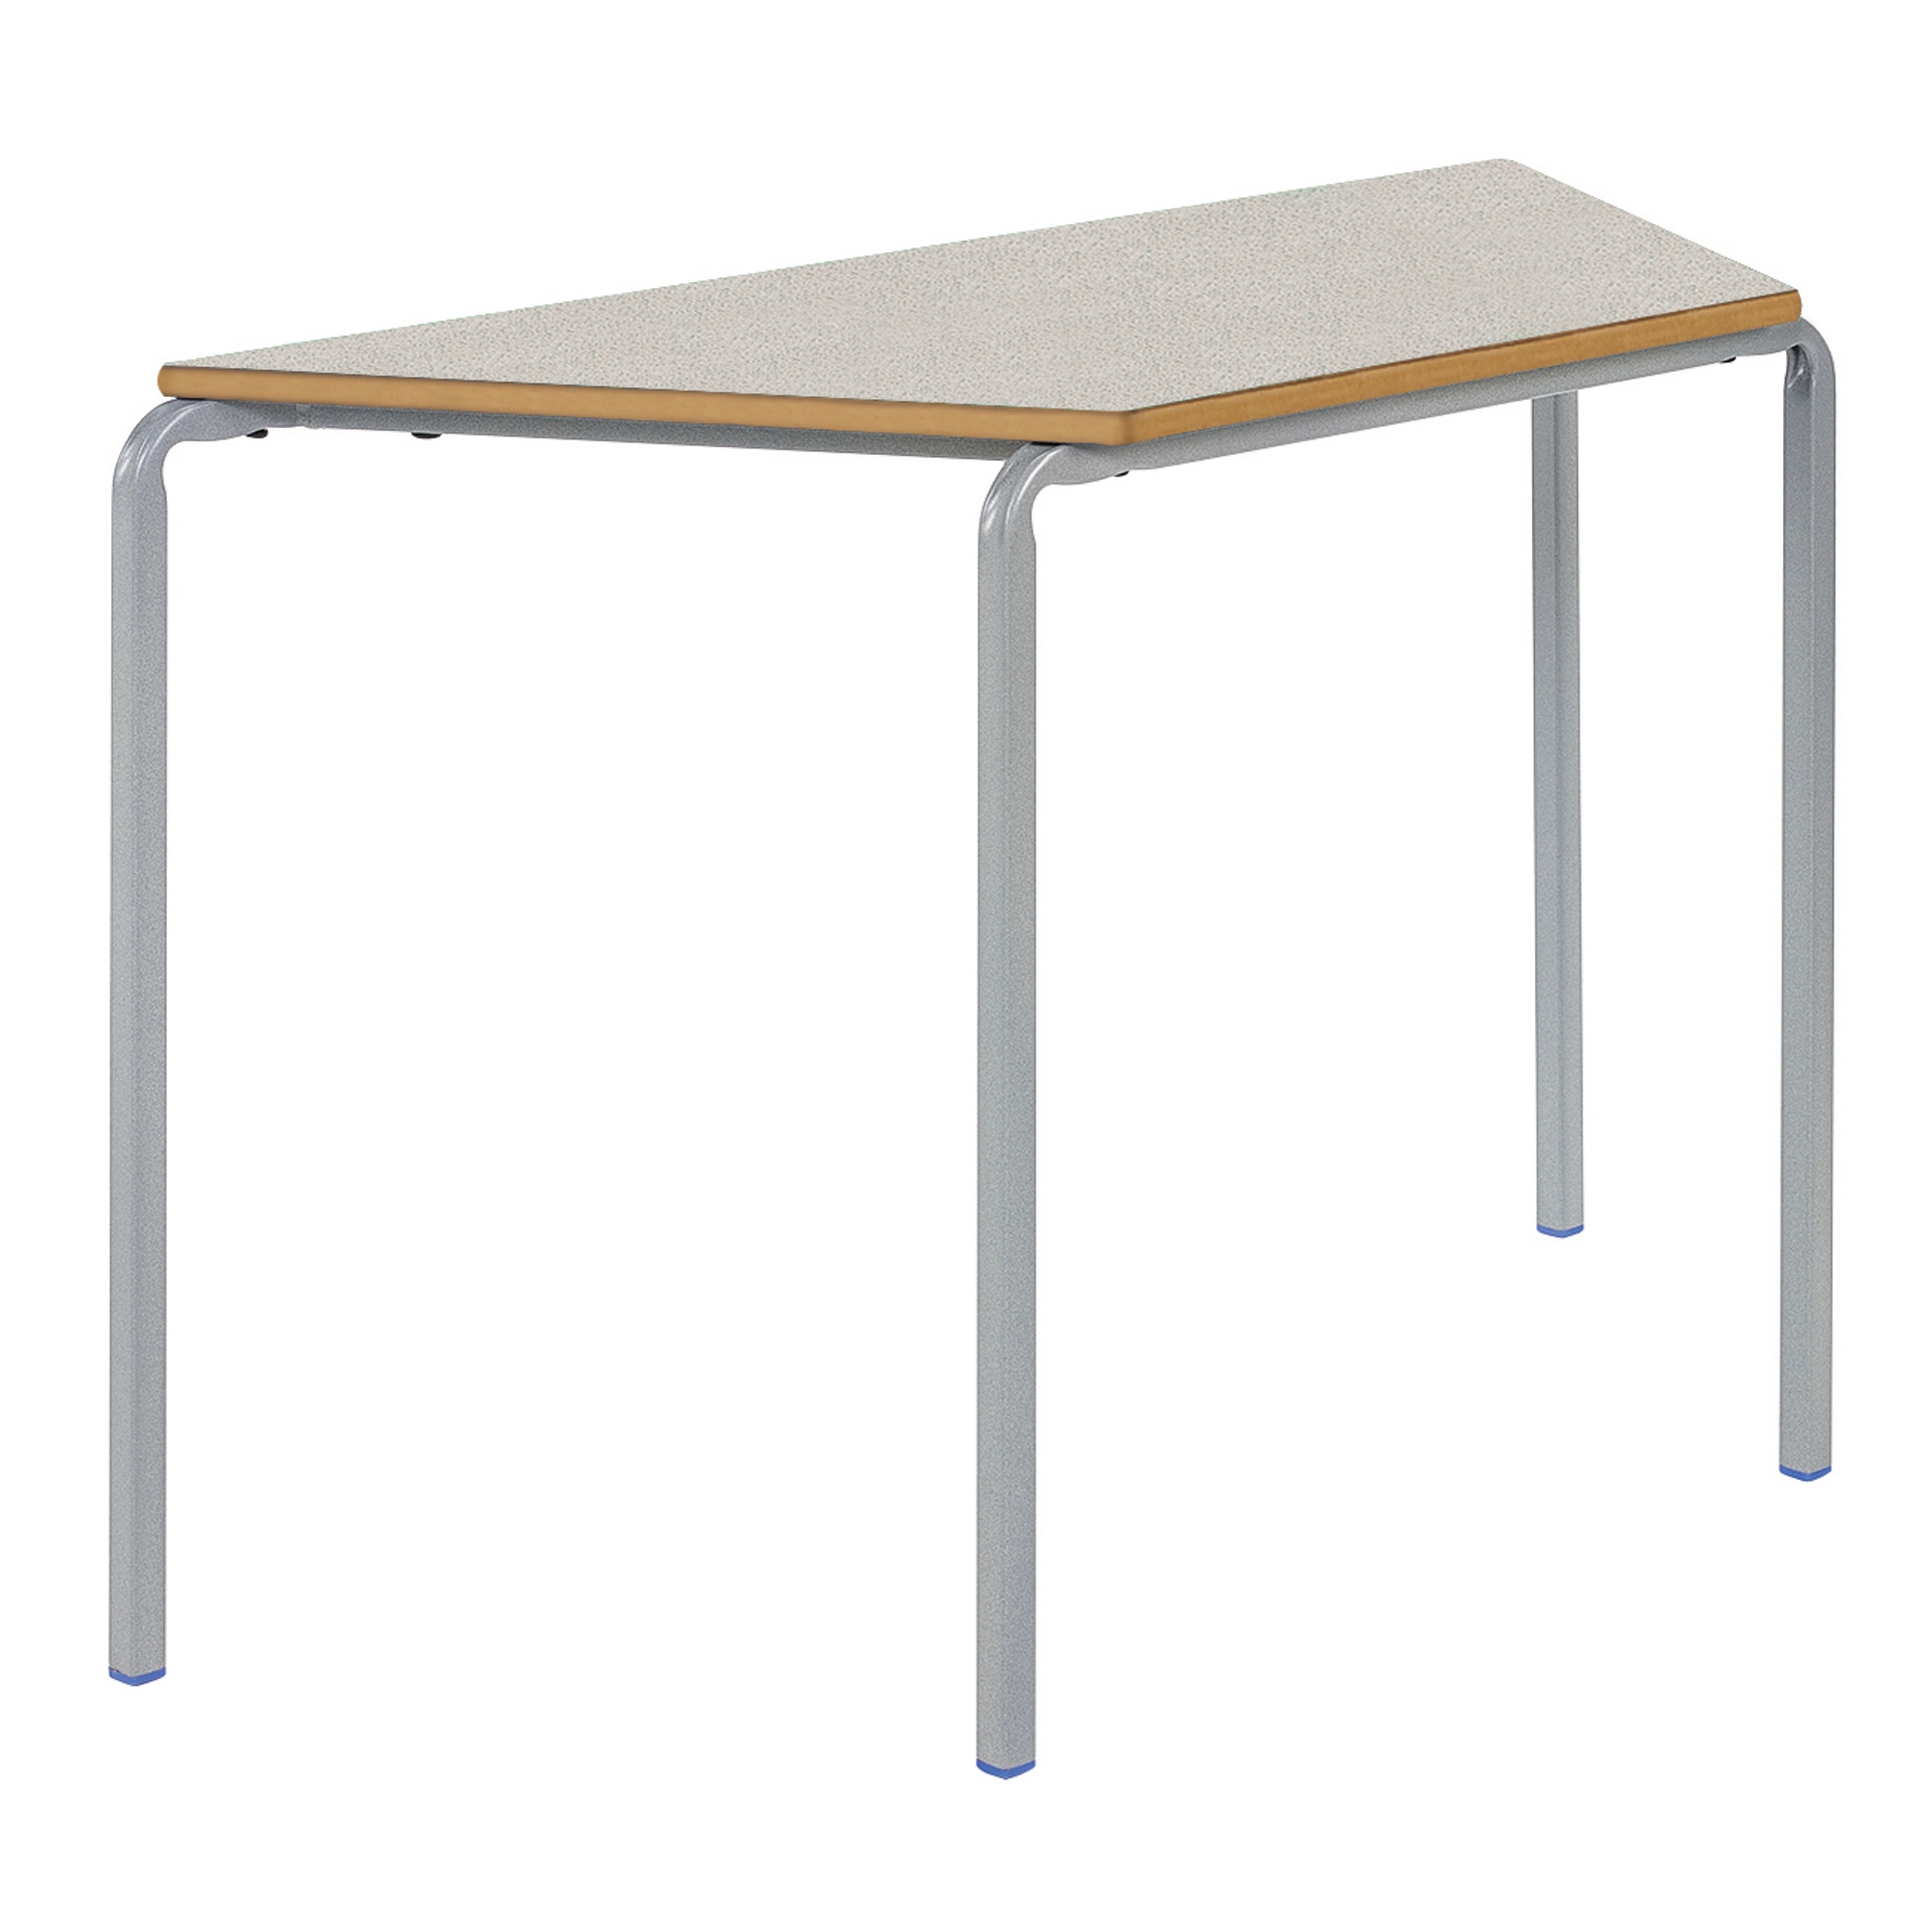 Classmates Trapezoidal Crushed Bent Classroom Table - 1100 x 550 x 760mm - Ailsa